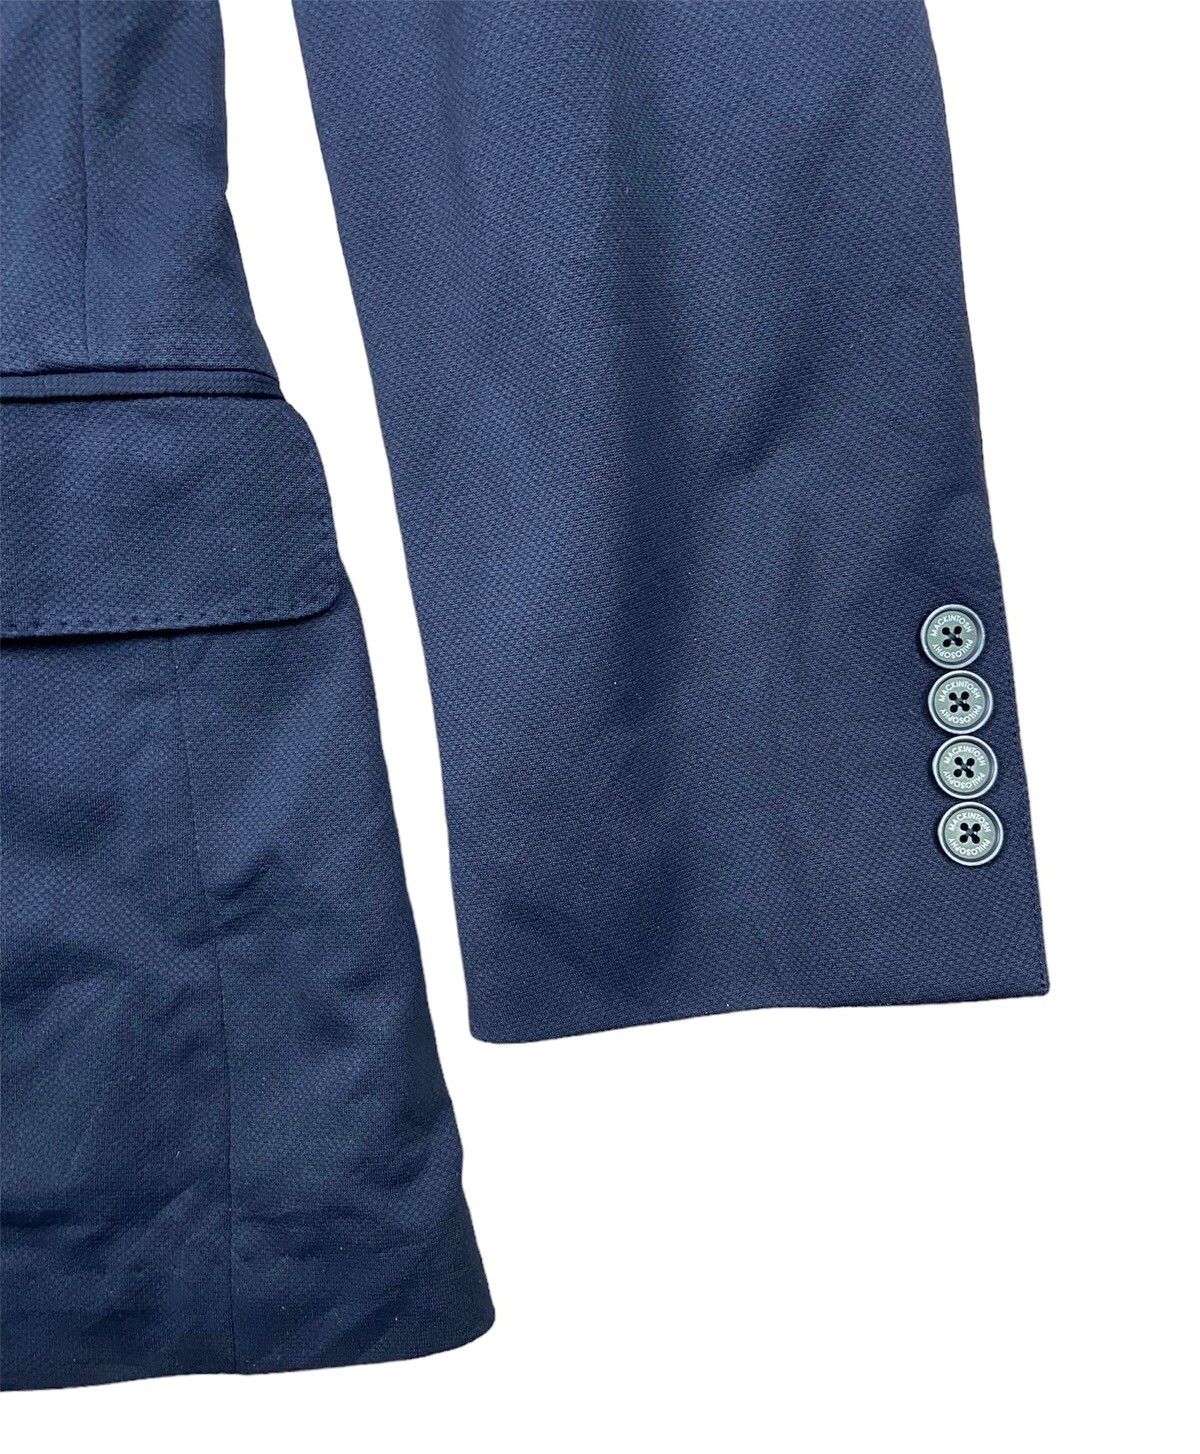 Mackintosh Vintage Mackintosh Philosophy Trotter Jacket Size 40R - 2 Preview